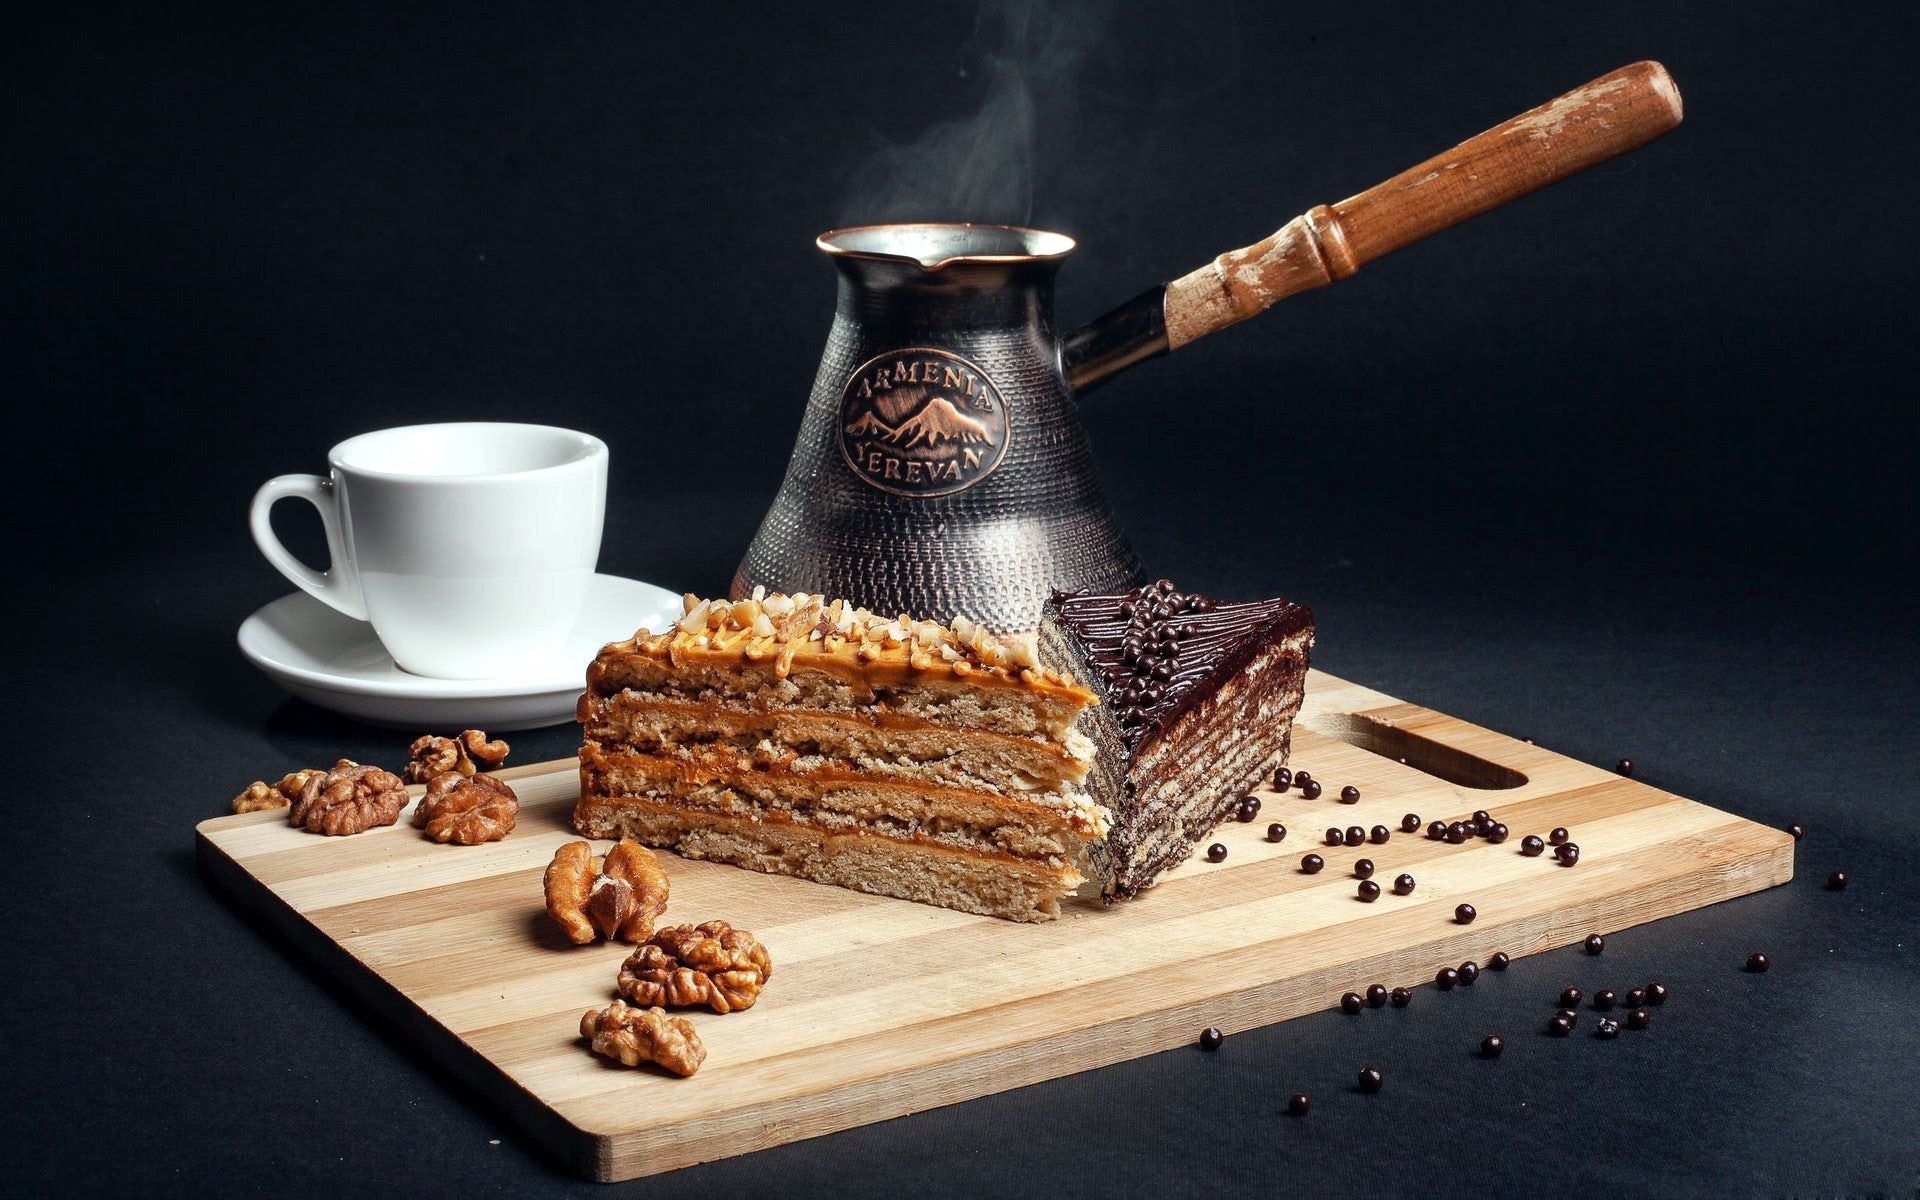 General 1920x1200 food sweets cake still life coffee mug walnuts cutting board